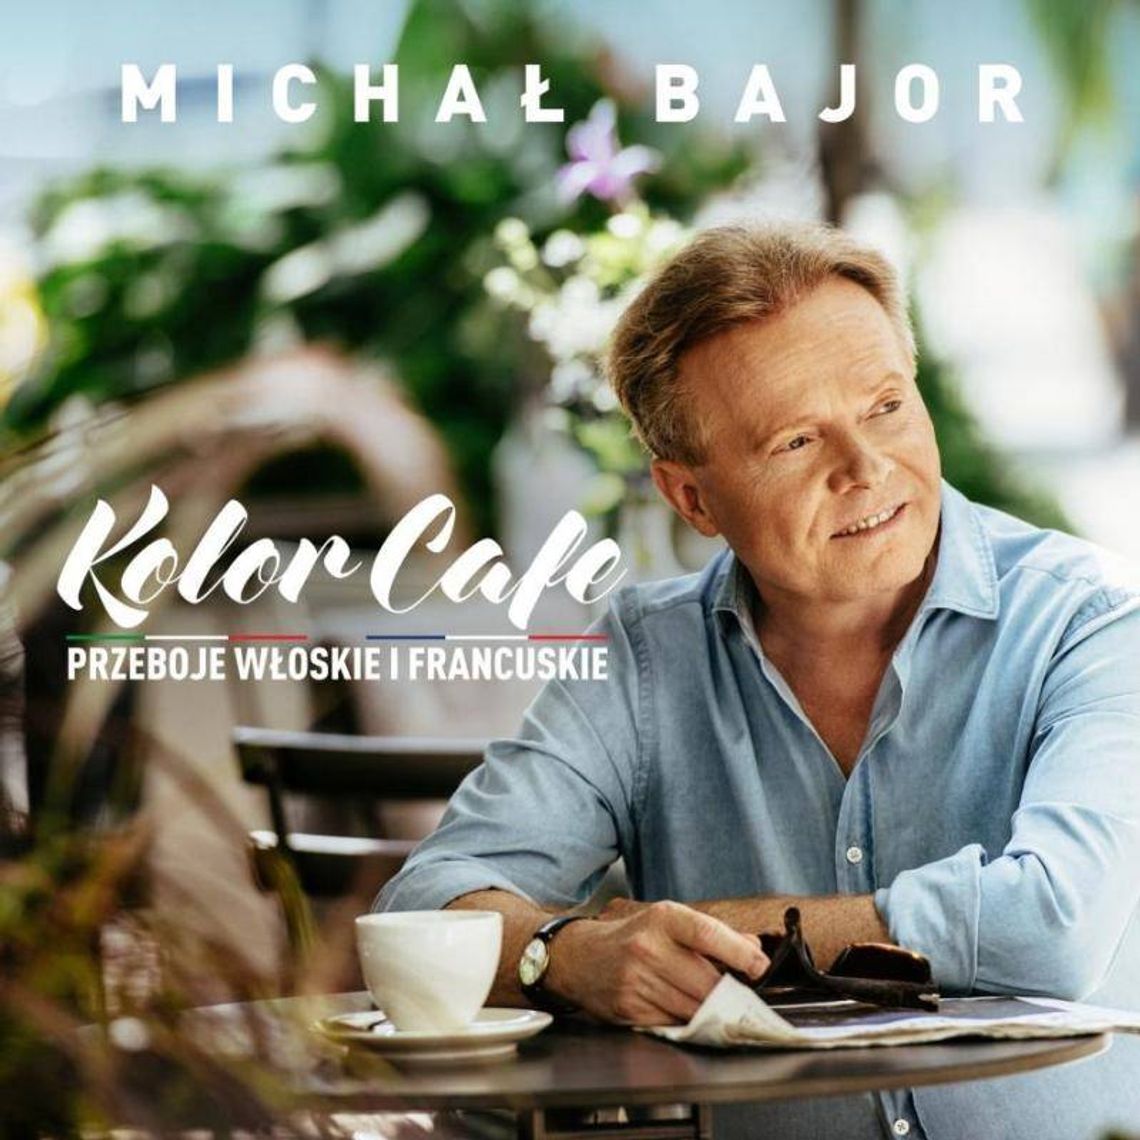 Michał Bajor "Kolor Cafe"